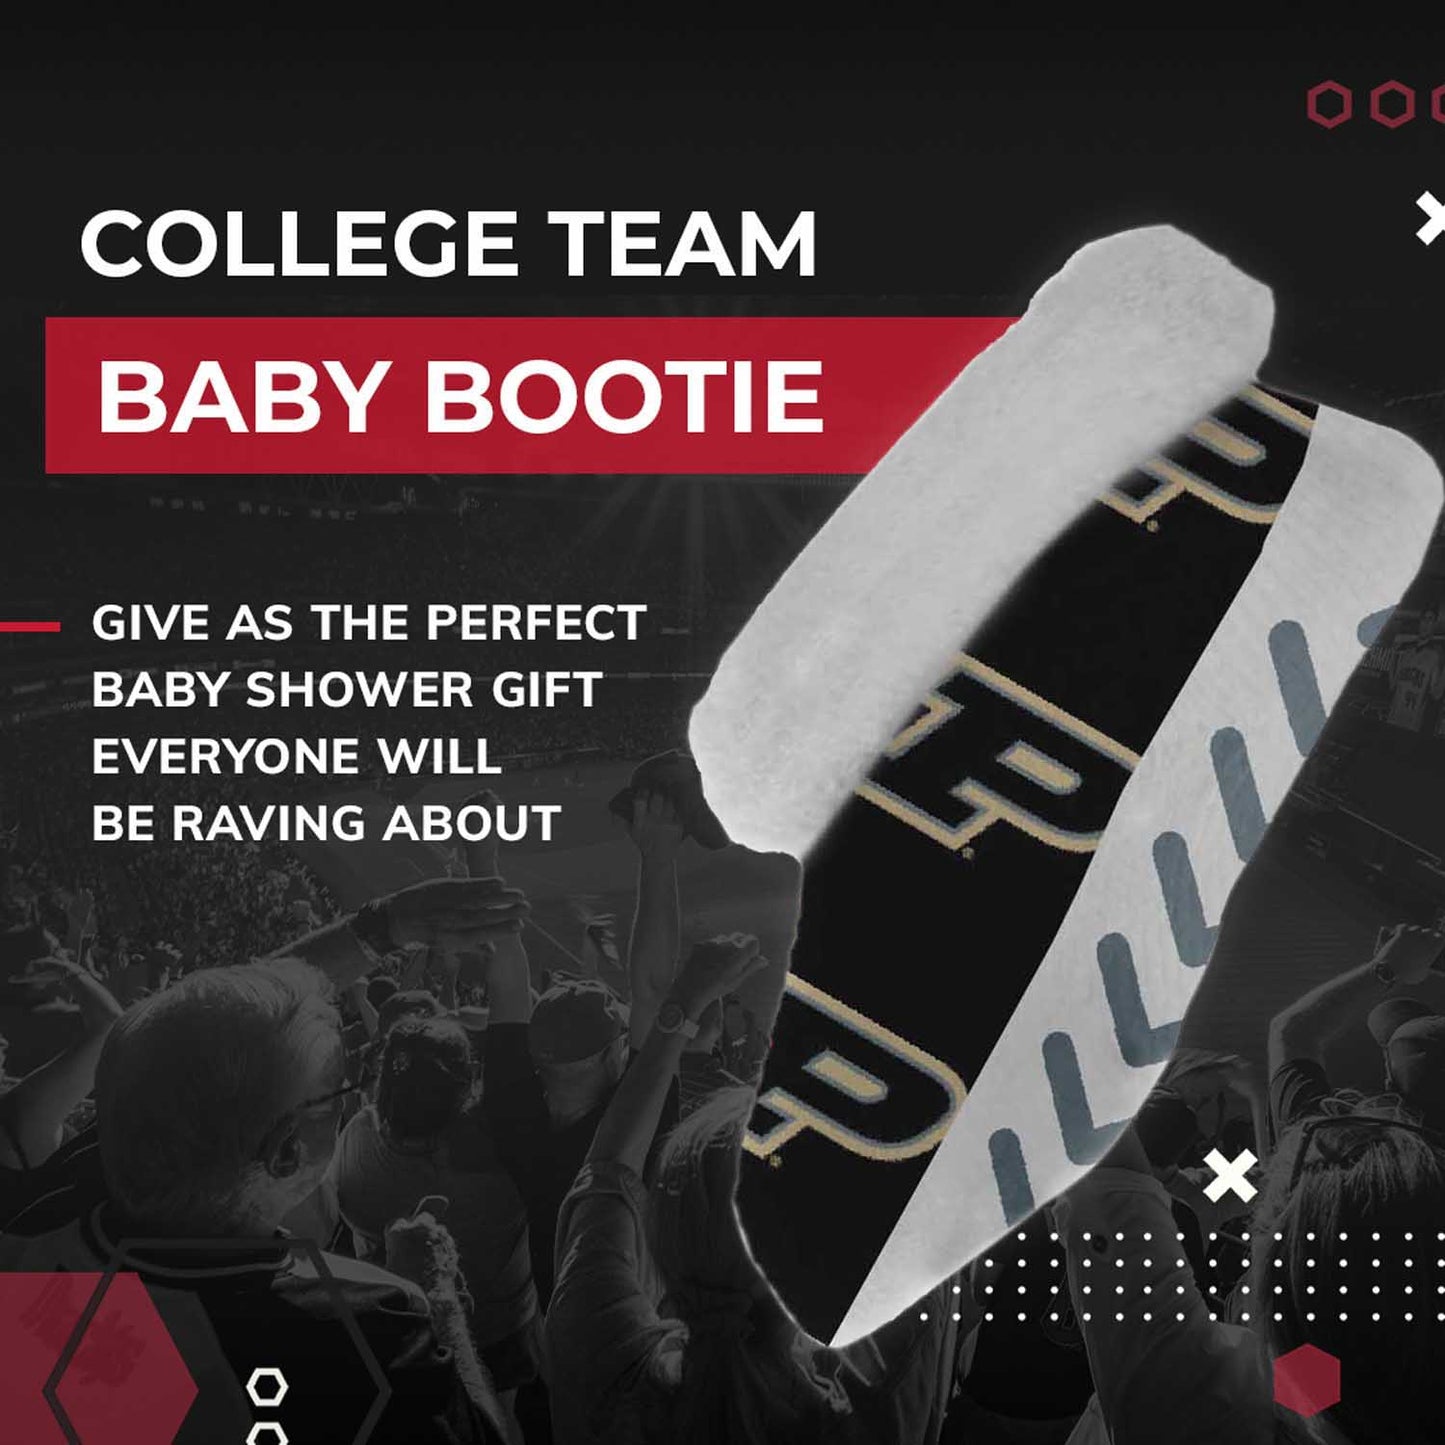 Purdue Boilermakers College Baby Booties Infant Boys Girls Cozy Slipper Socks - Black